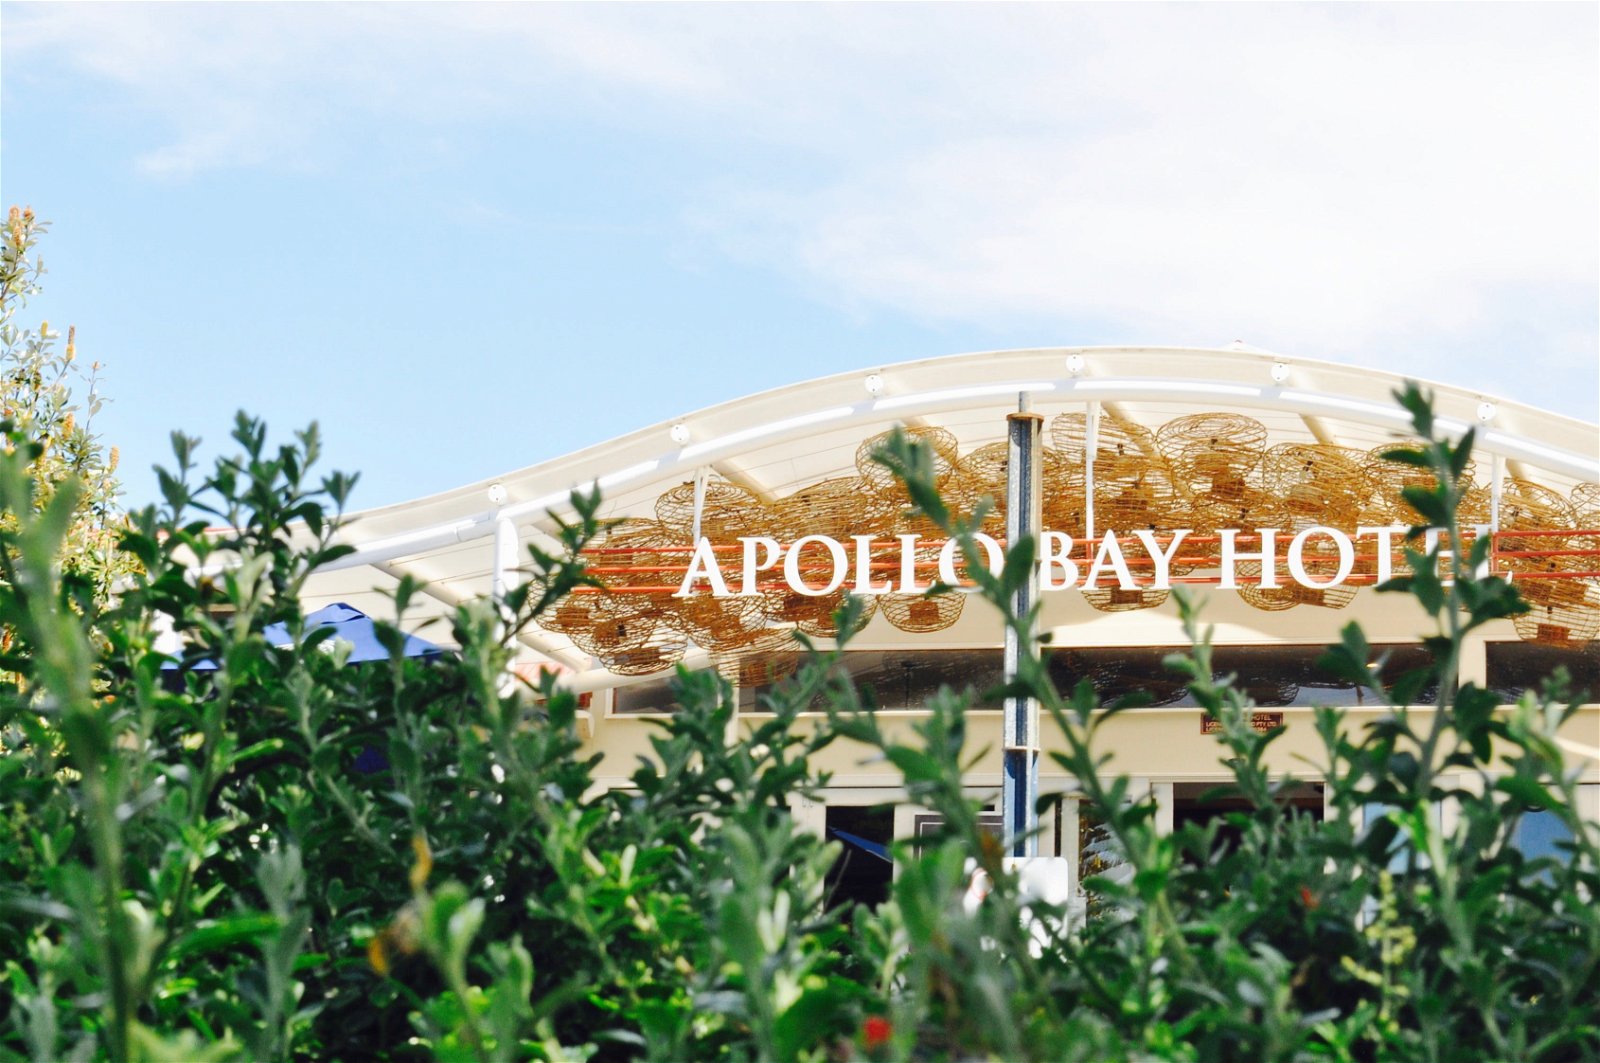 Apollo Bay Hotel - Australia Accommodation